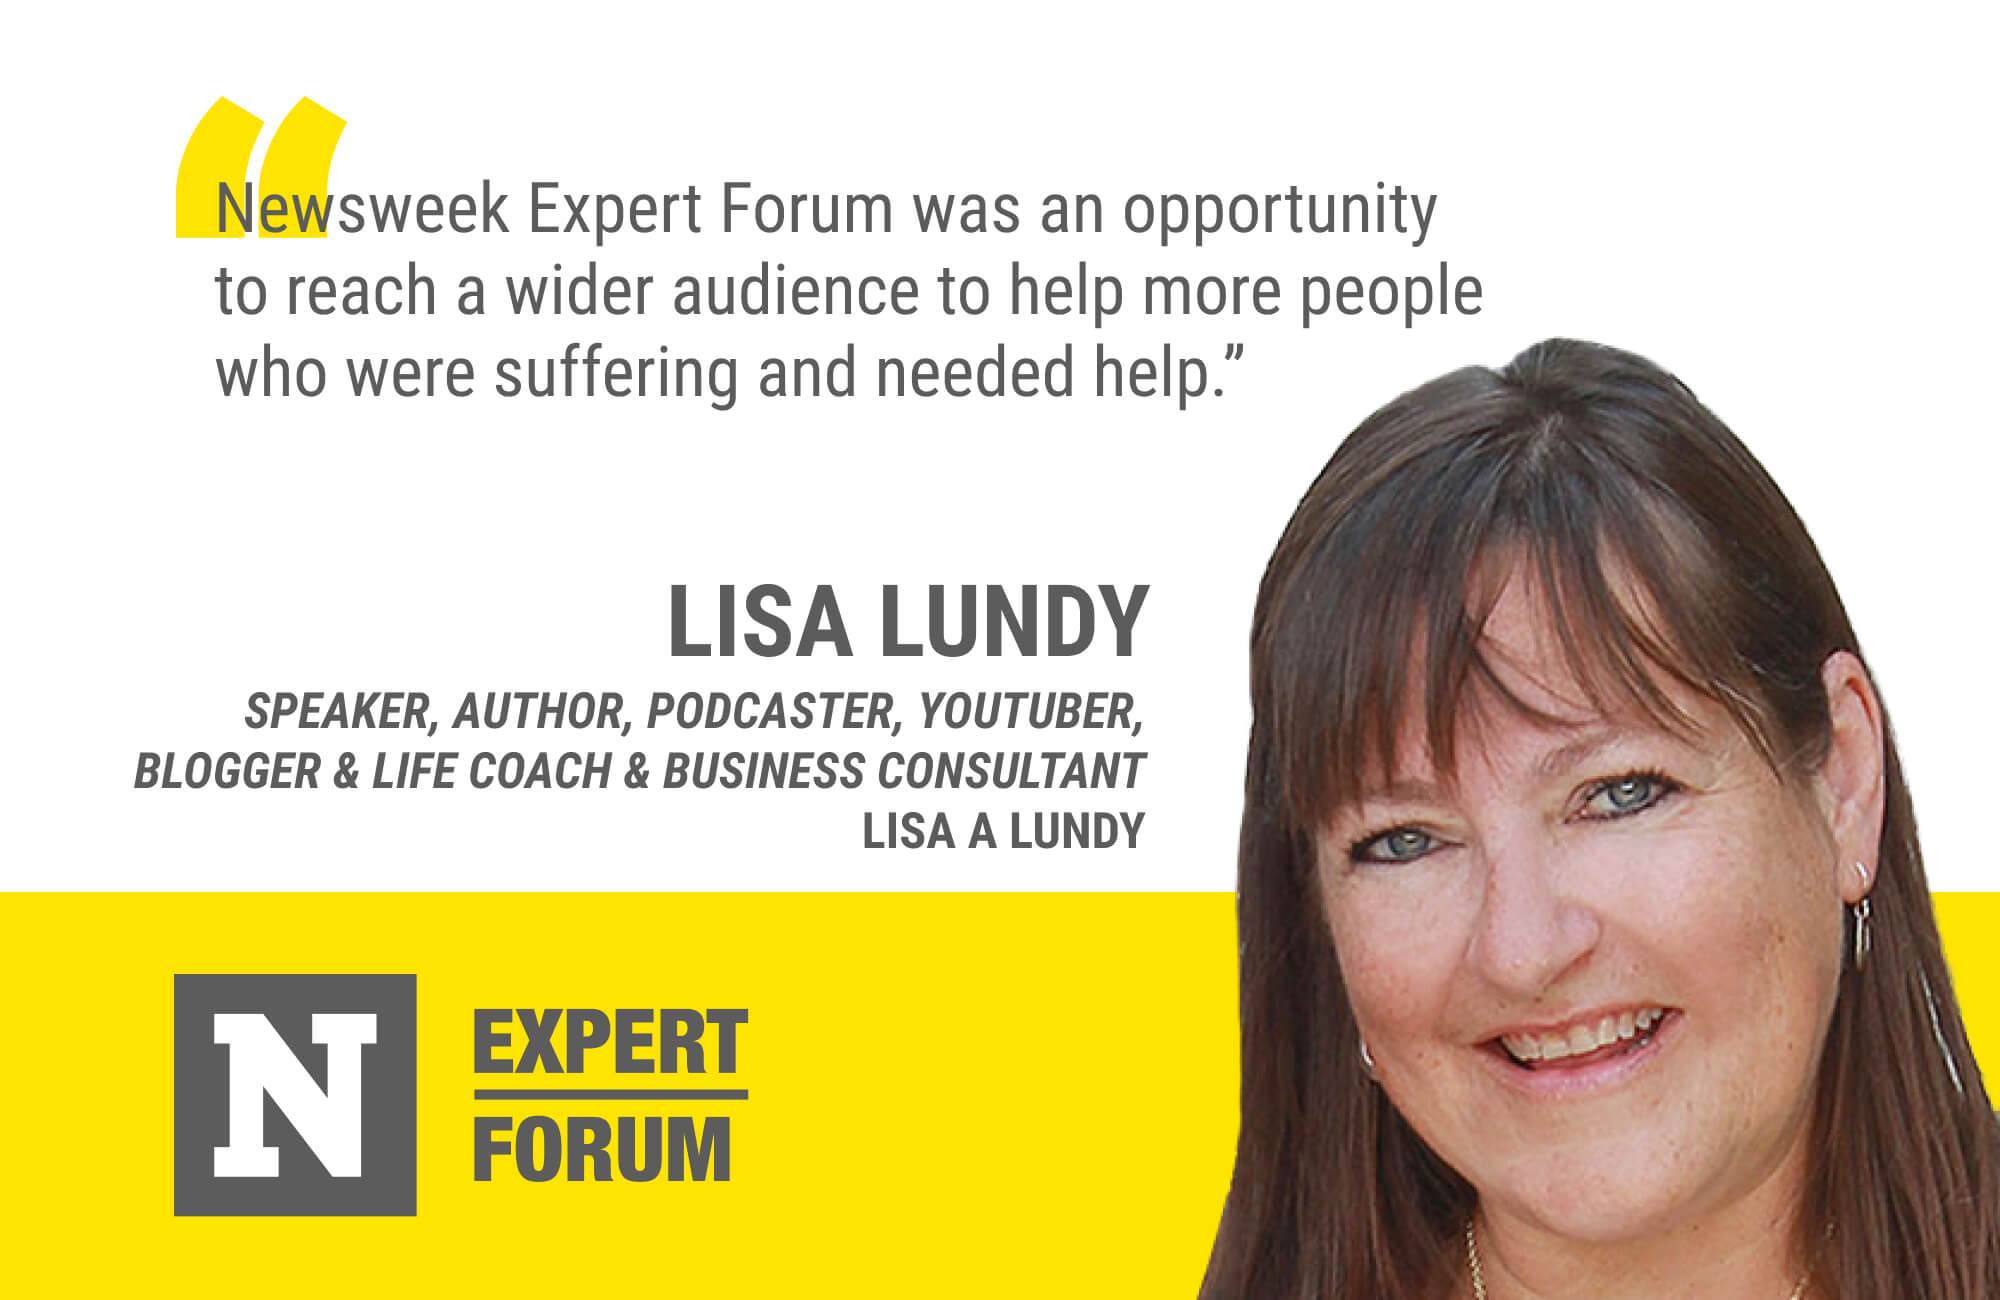 Newsweek Expert Forum member Lisa Lundy